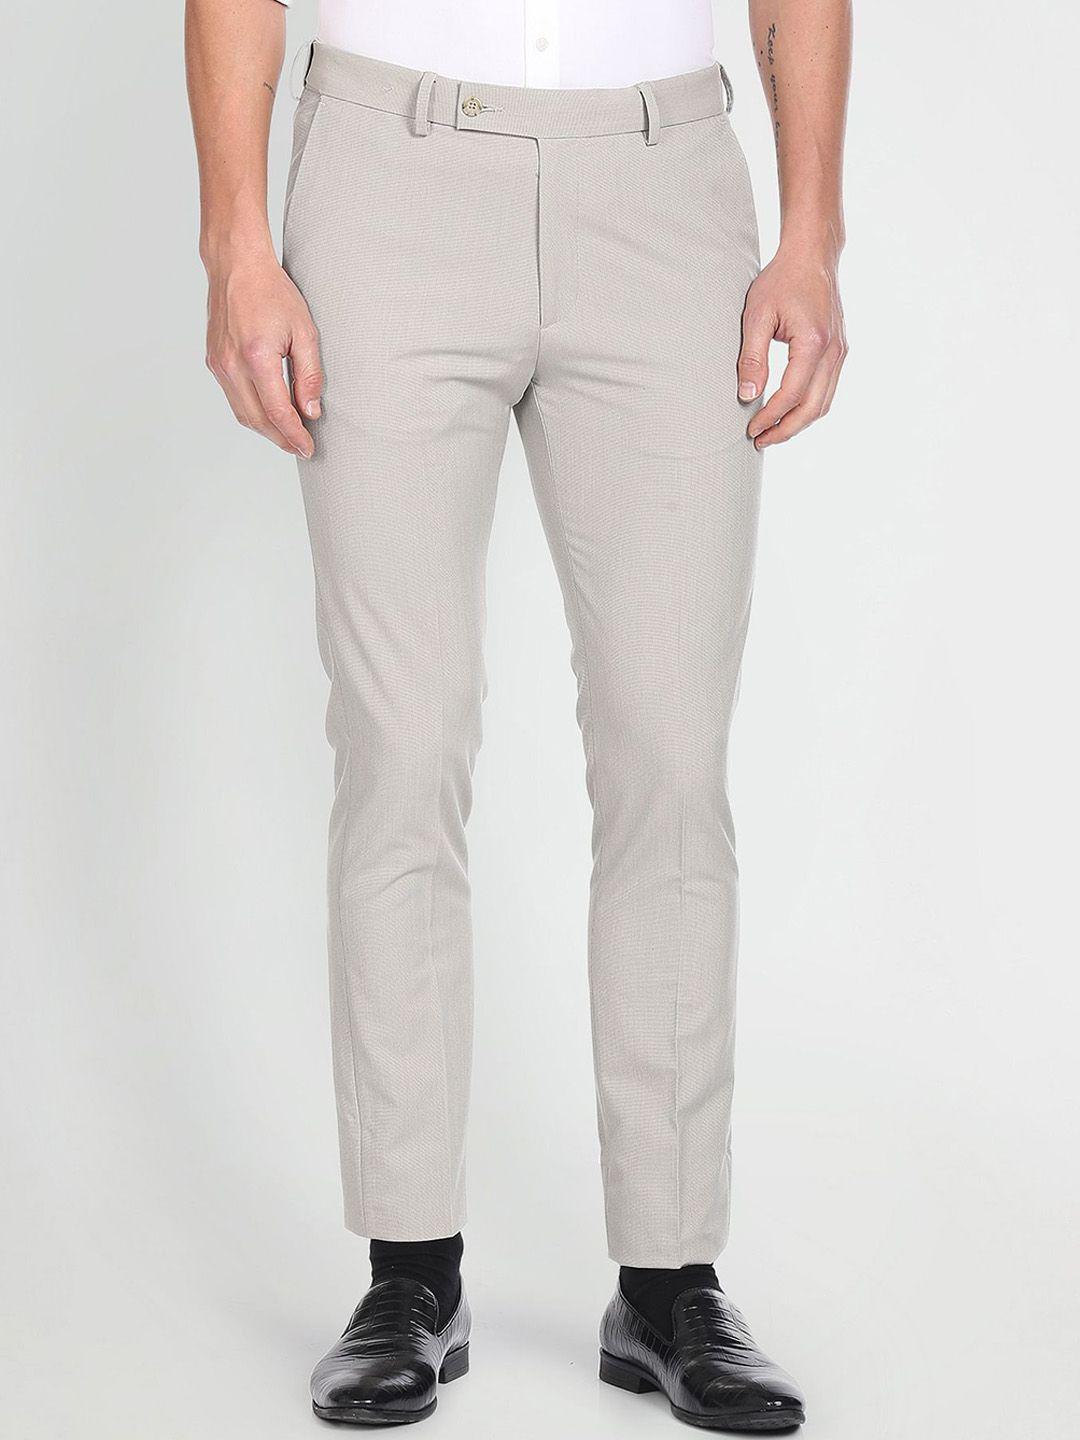 arrow-men-beige-slim-fit-chinos-trousers